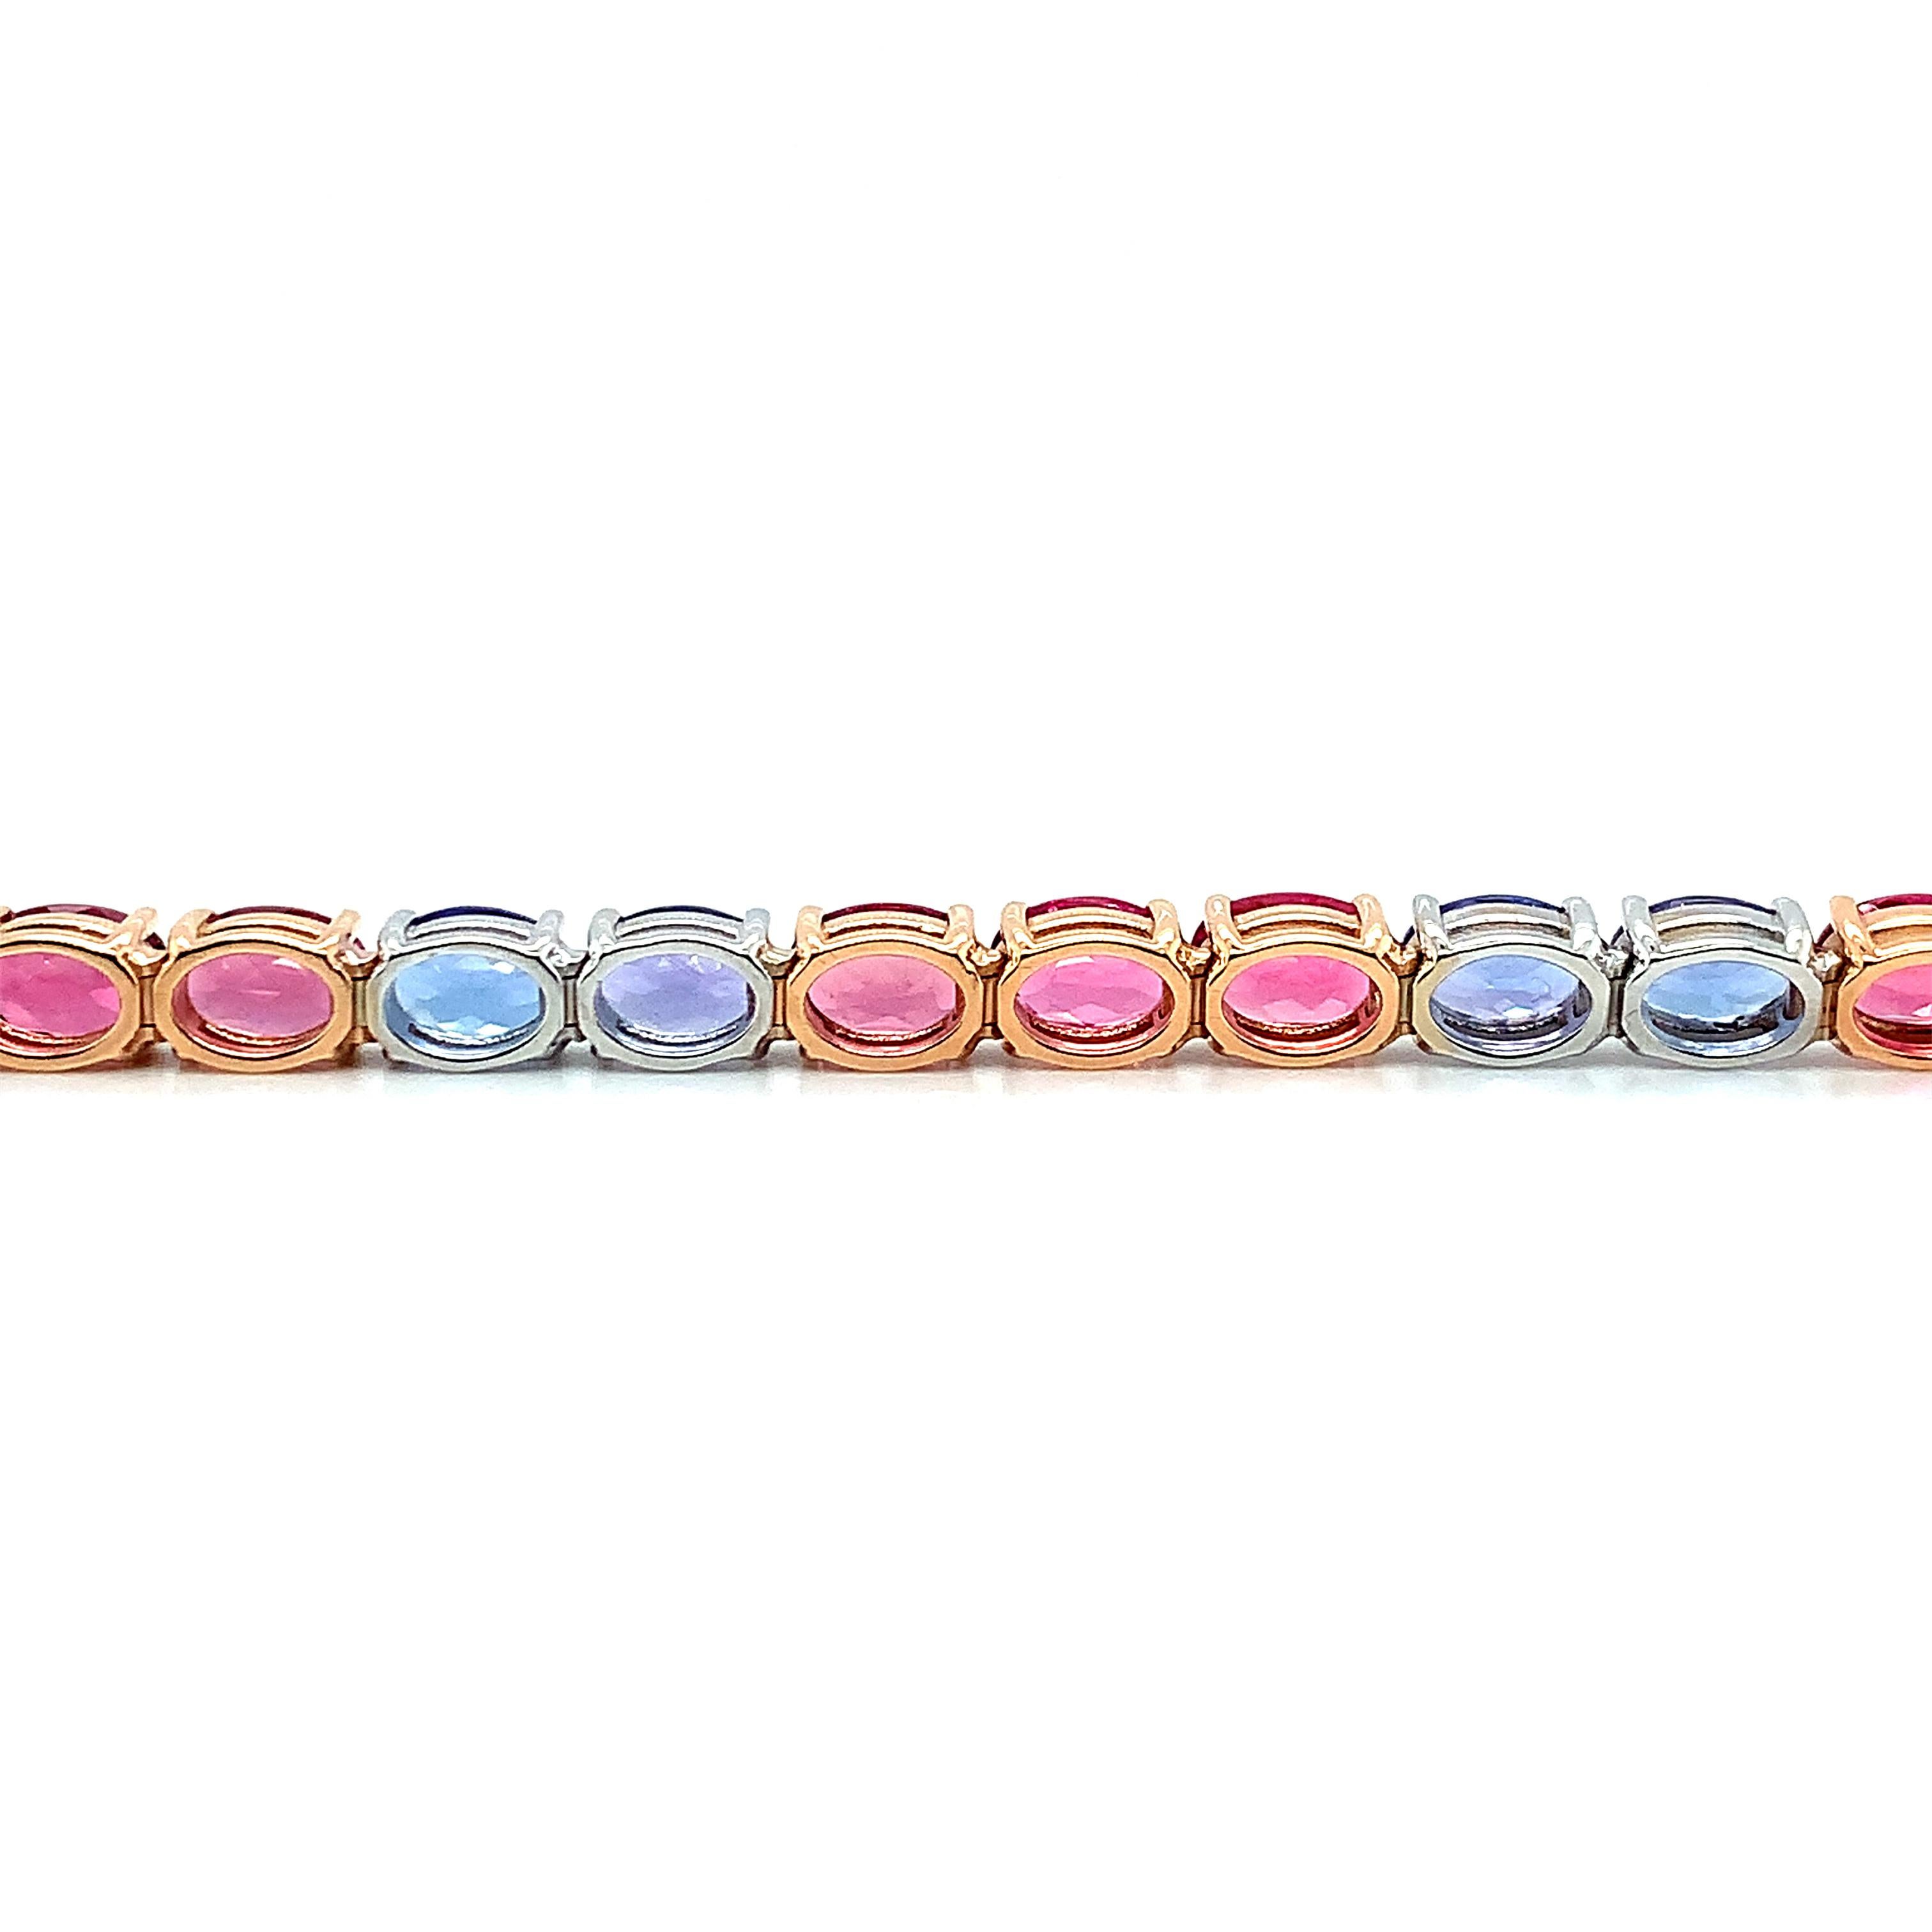 Taille ovale Bracelet tennis en tanzanite et tourmaline rose en or blanc et rose en vente